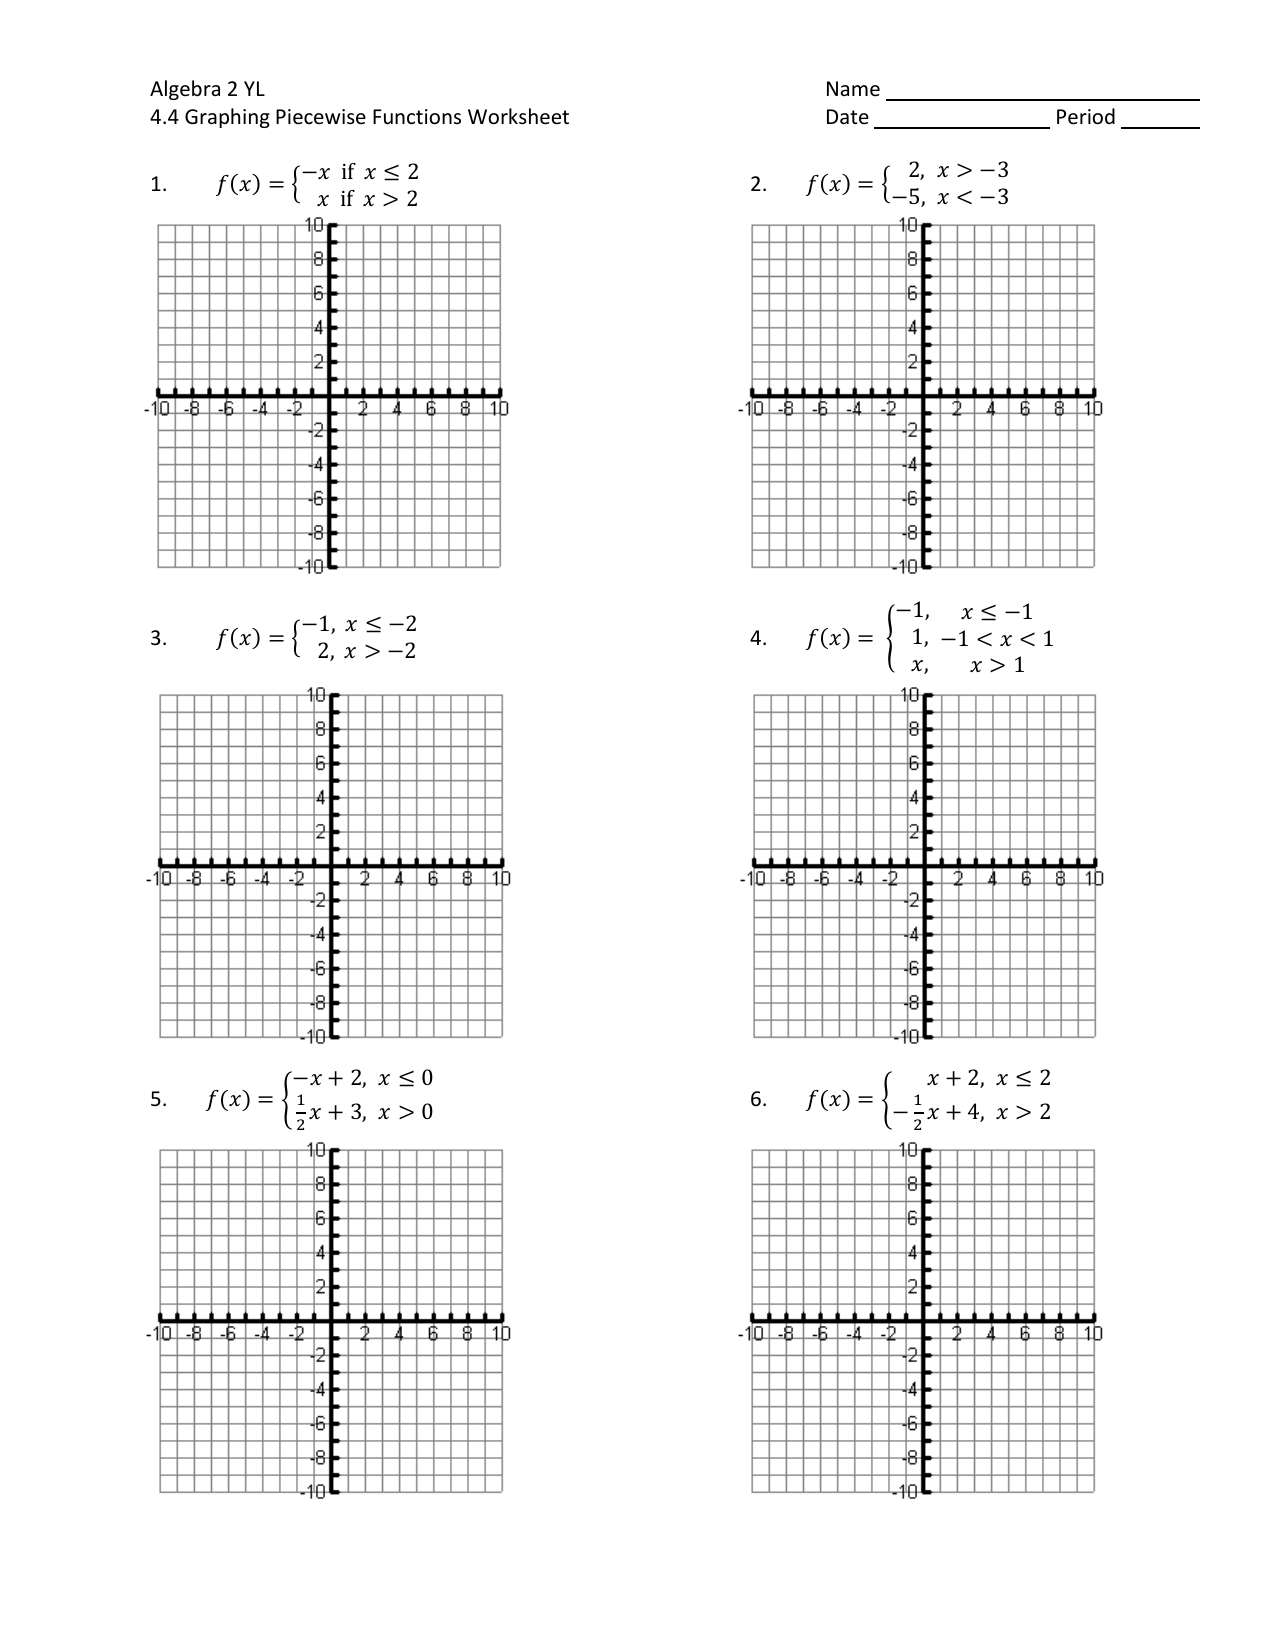 36 Algebra 2 Yl 4 4 Graphing Piecewise Functions Worksheet Support Worksheet